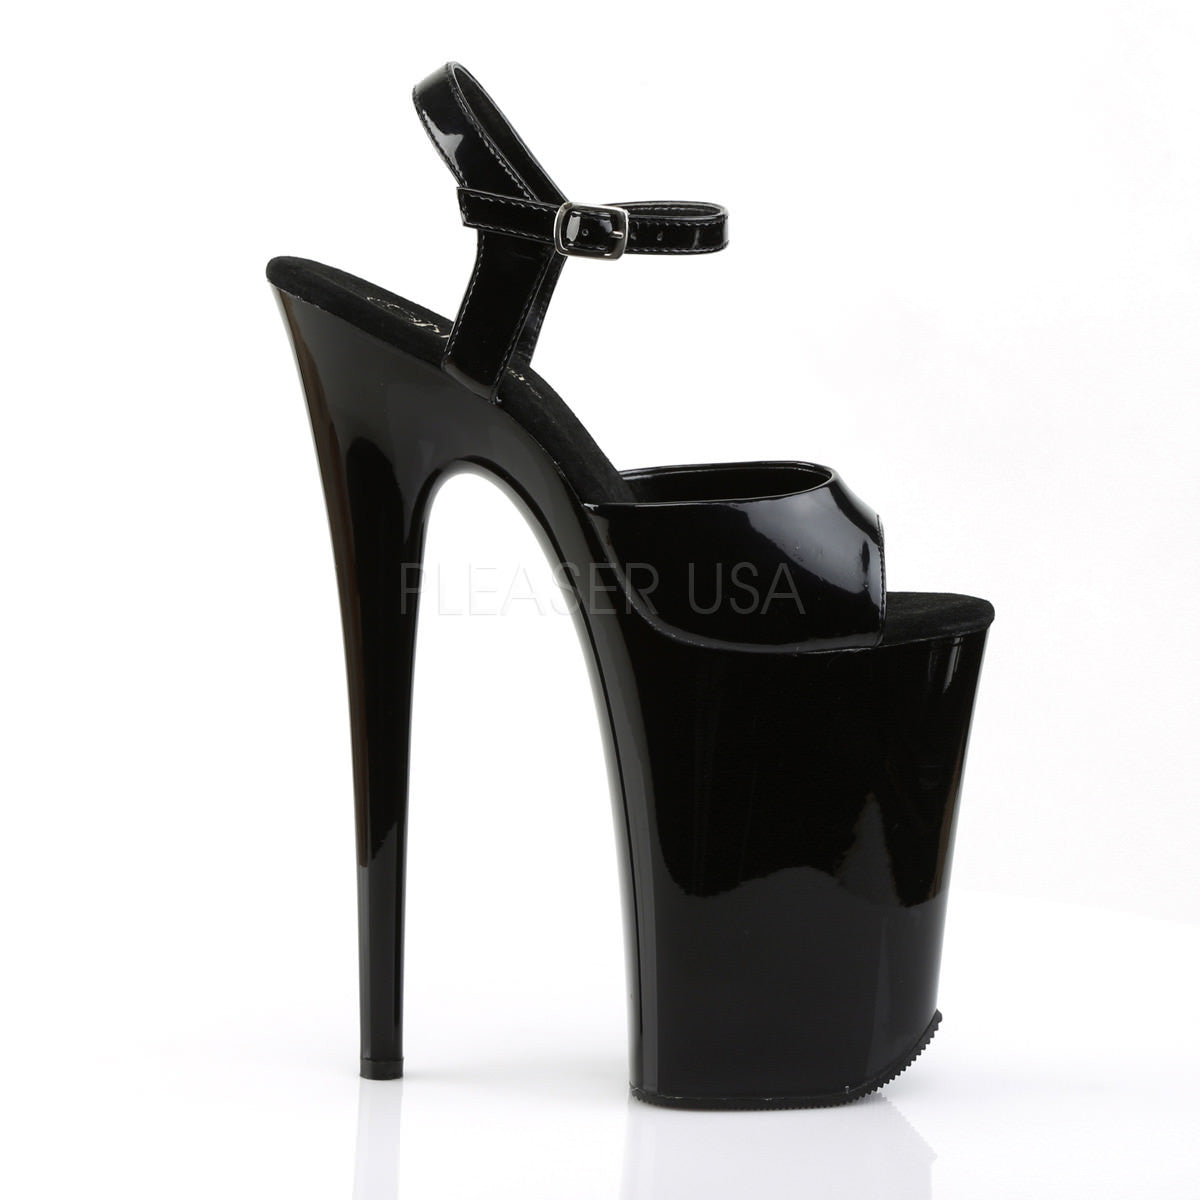 Mossimo Supply Co. | Shoes | Mossimo Black Height Heels 9 Inch Heel |  Poshmark